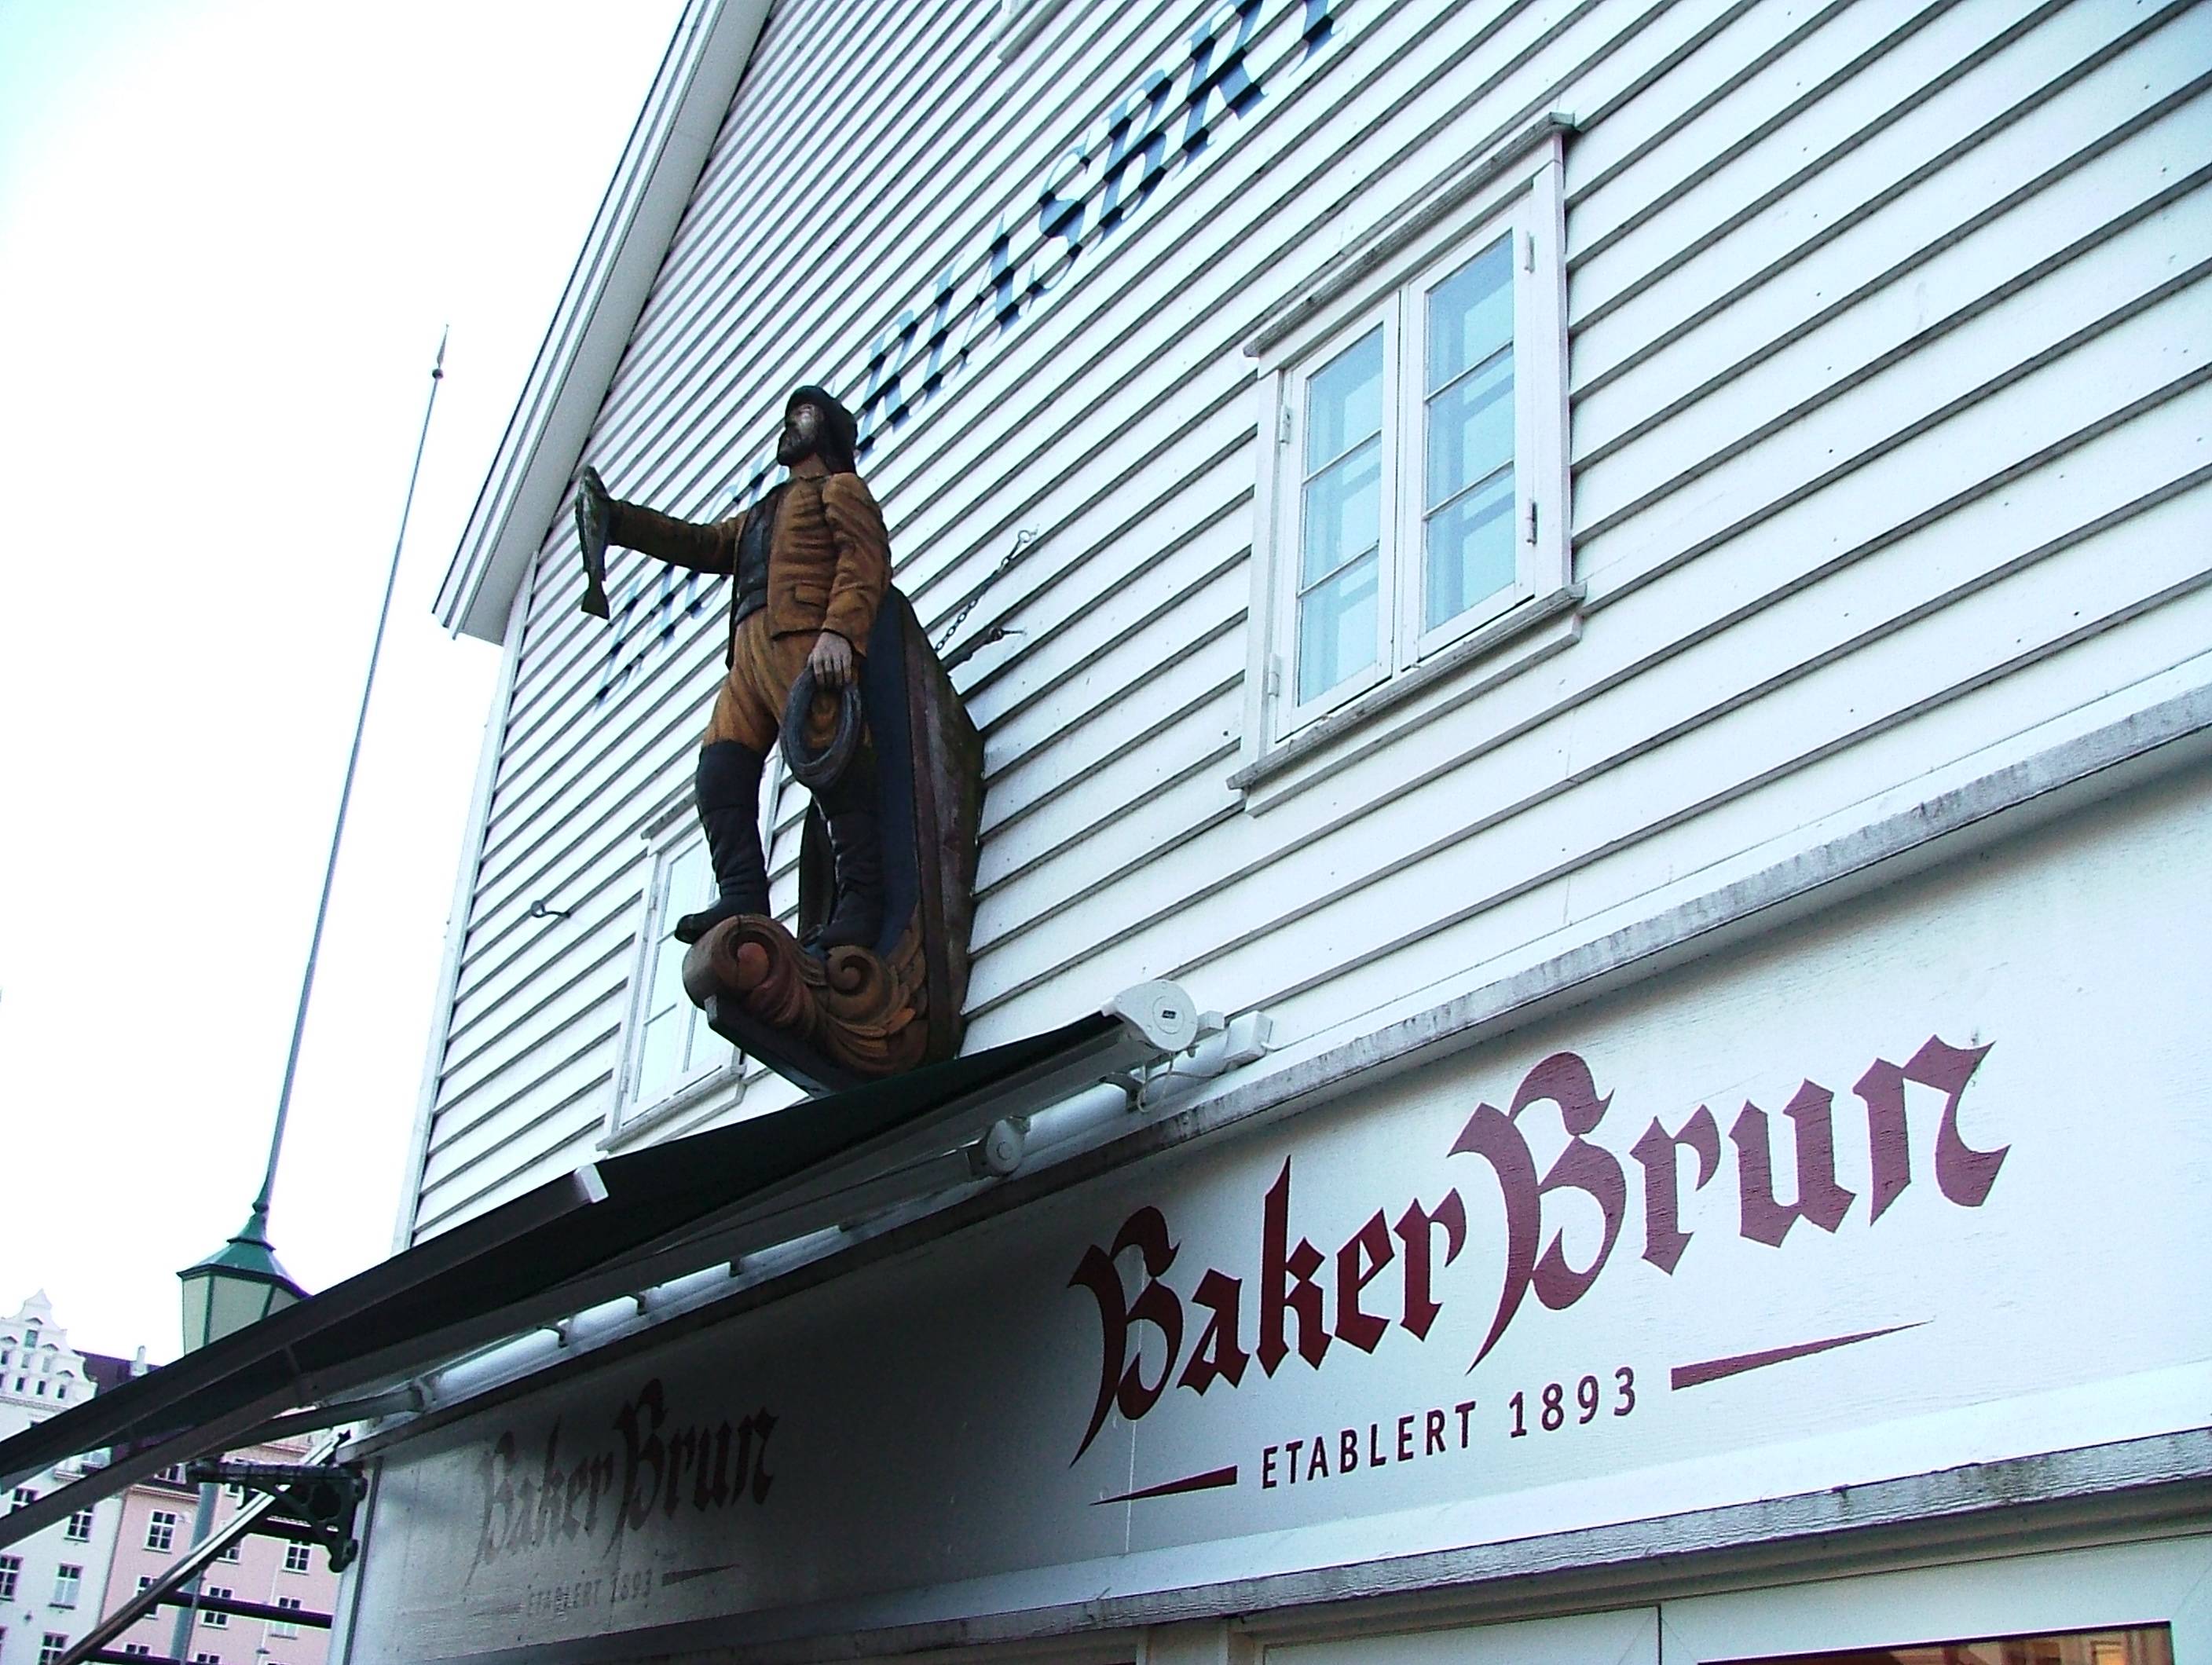 Baker Brun a wellknown name in Bergen